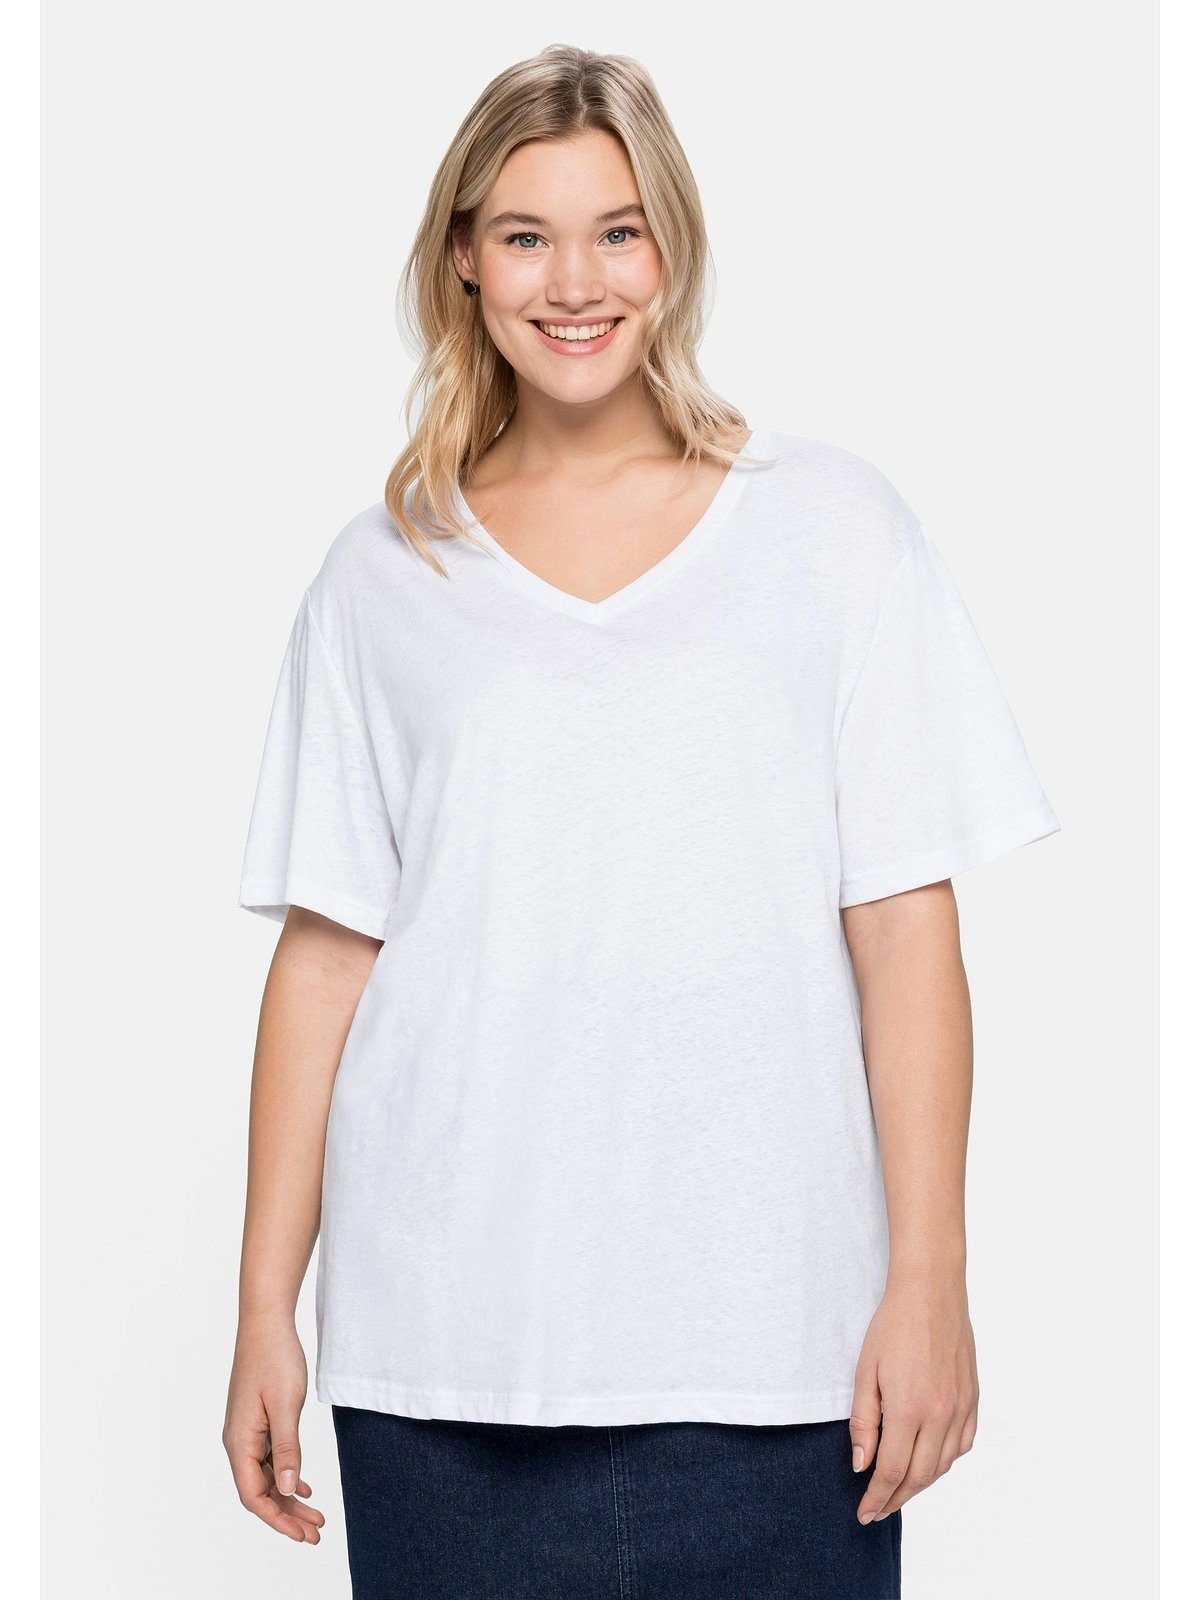 T-Shirt Große Sheego weiß aus edlem Leinen-Viskose-Mix Größen